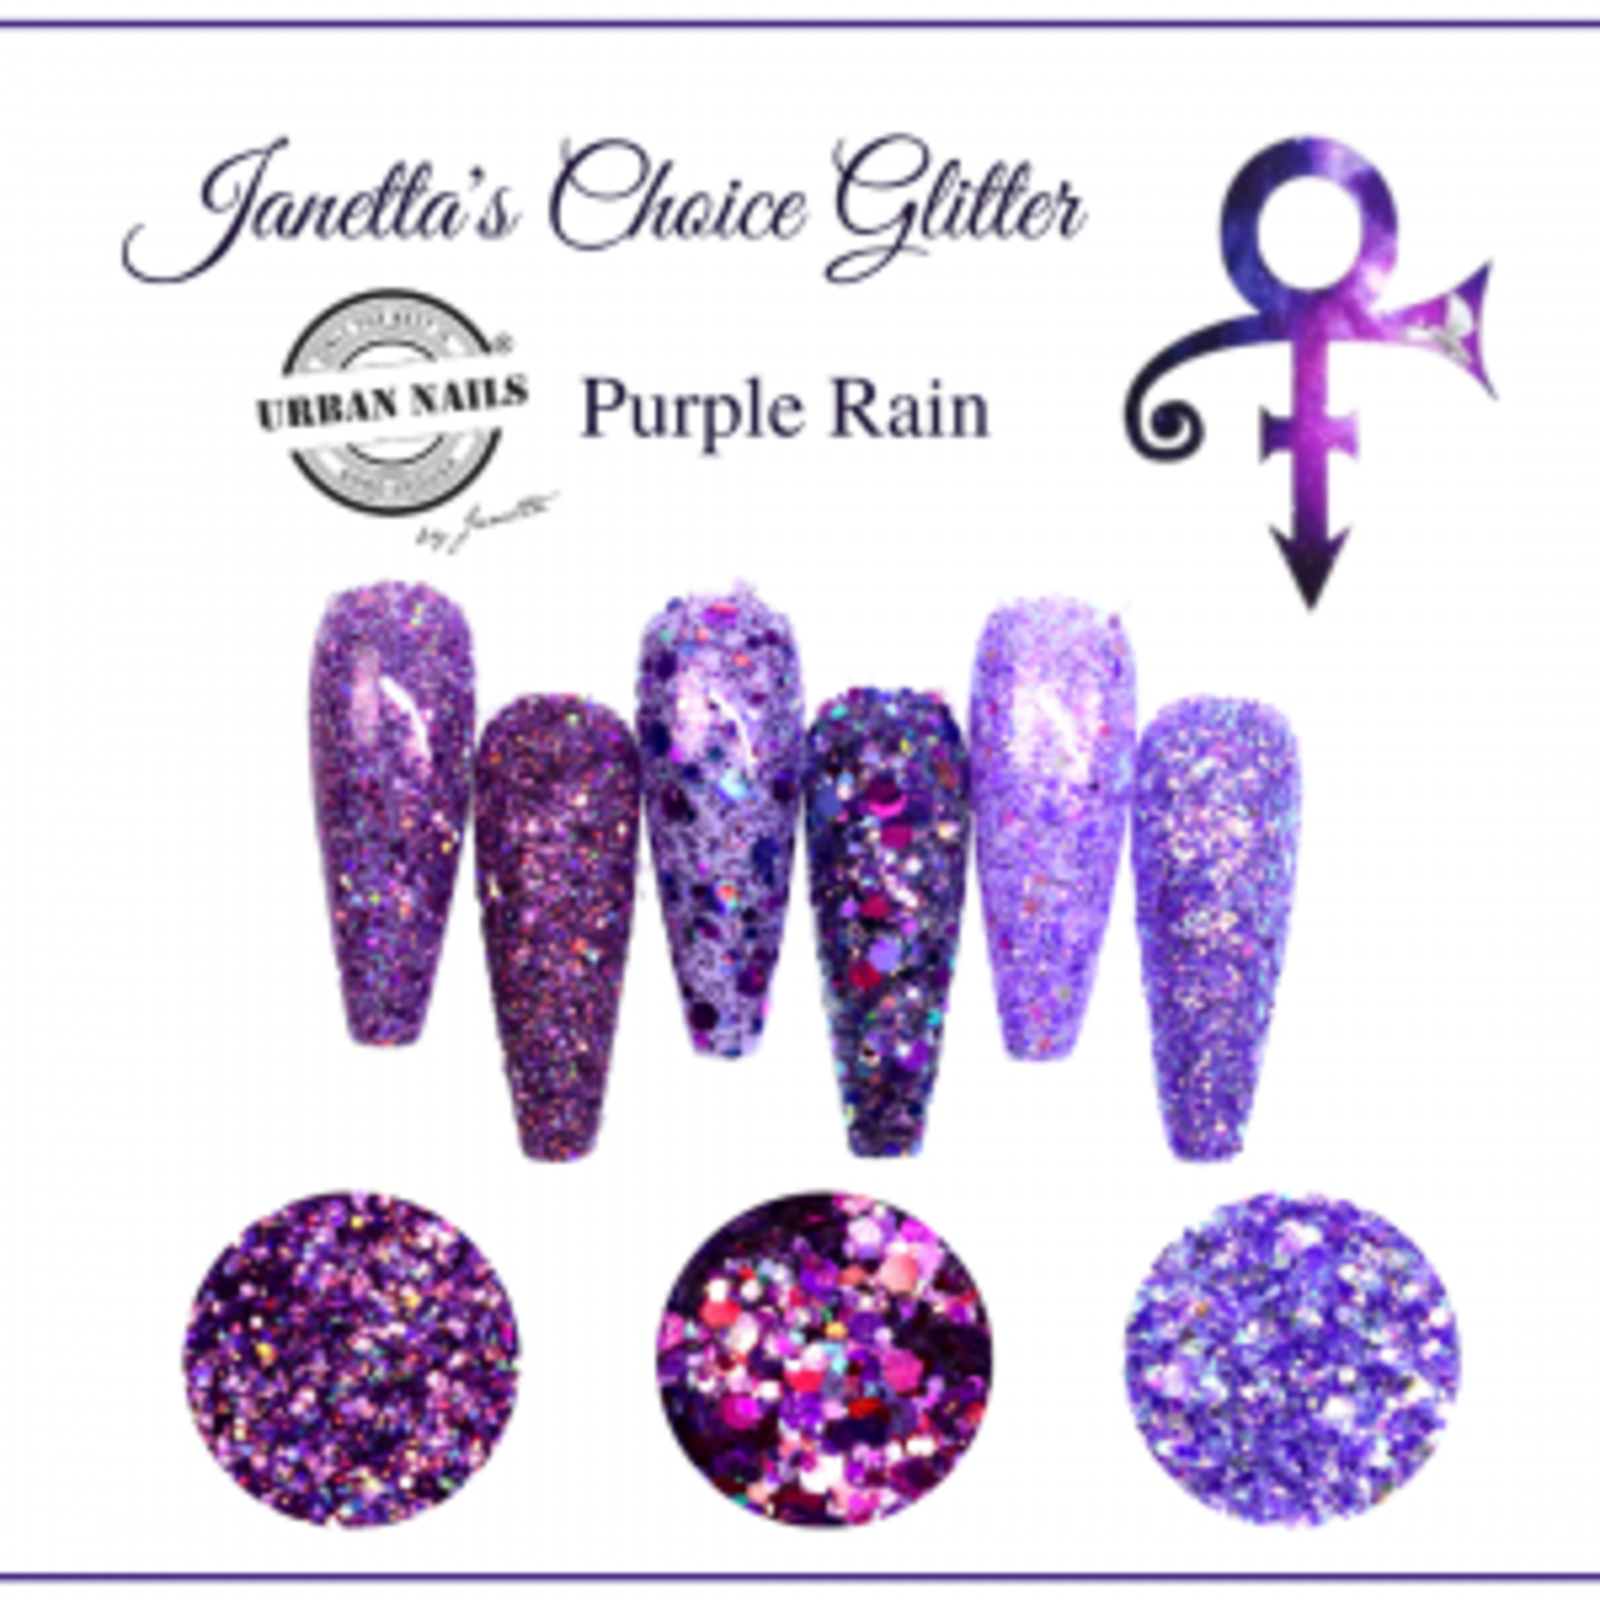 Urban nails Limited glitter collection janetta’s choice purple  rain